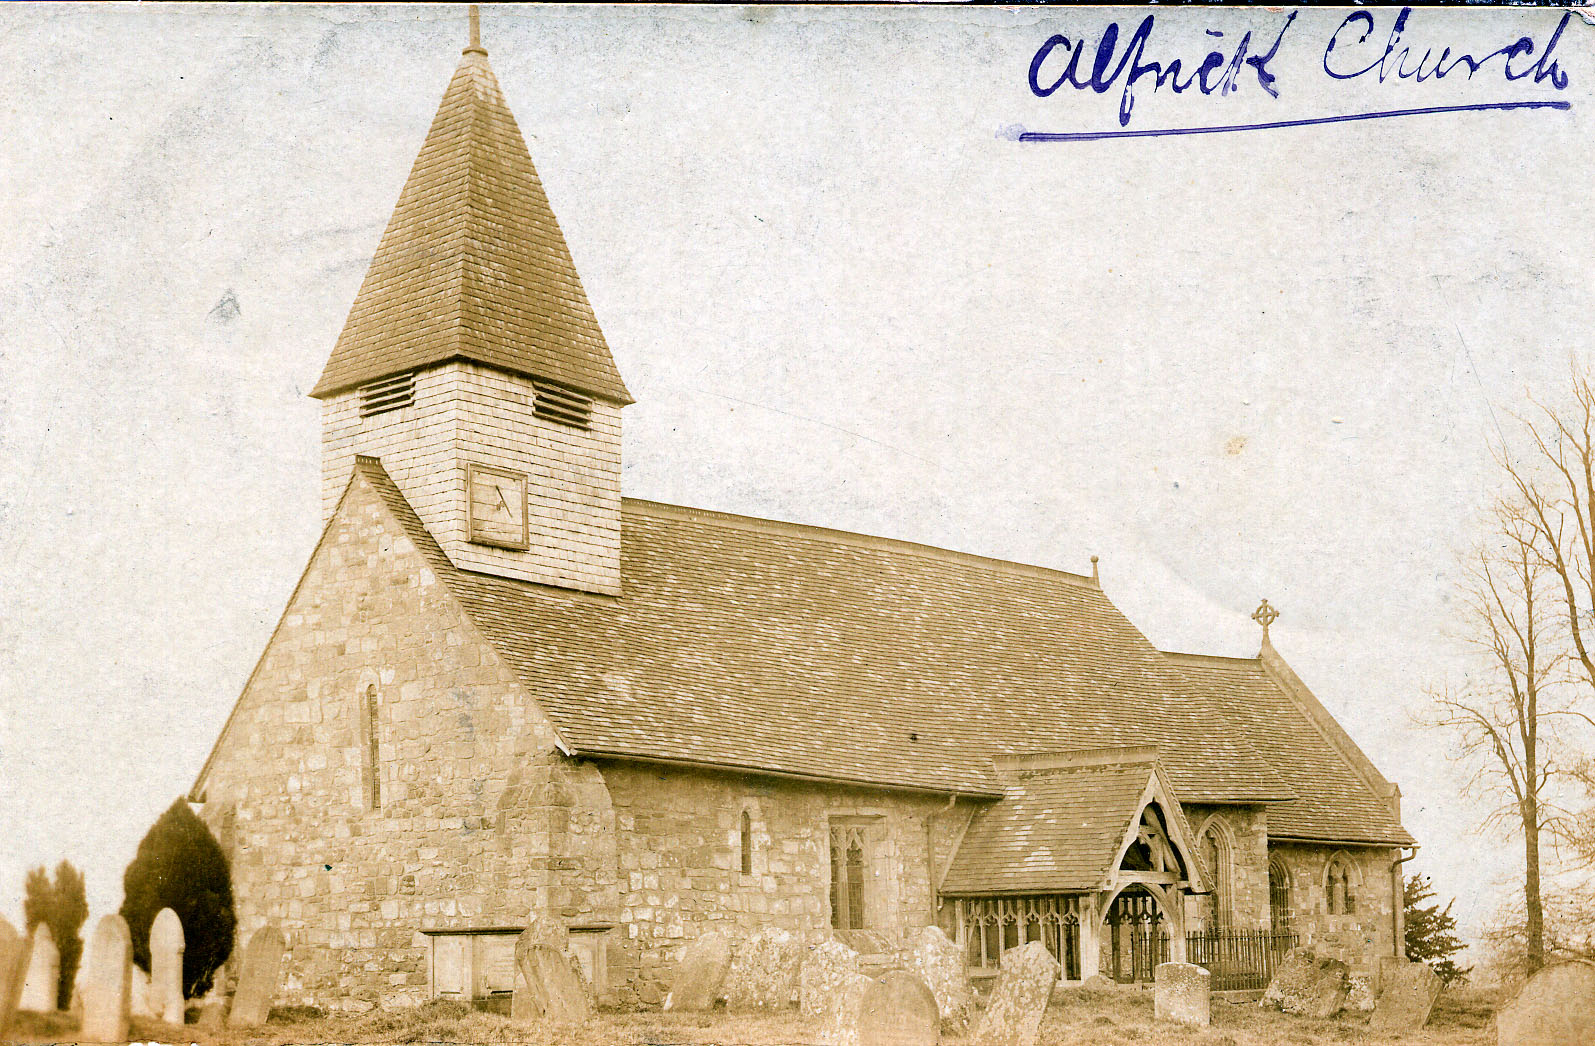 An old photograph of Alfrick church